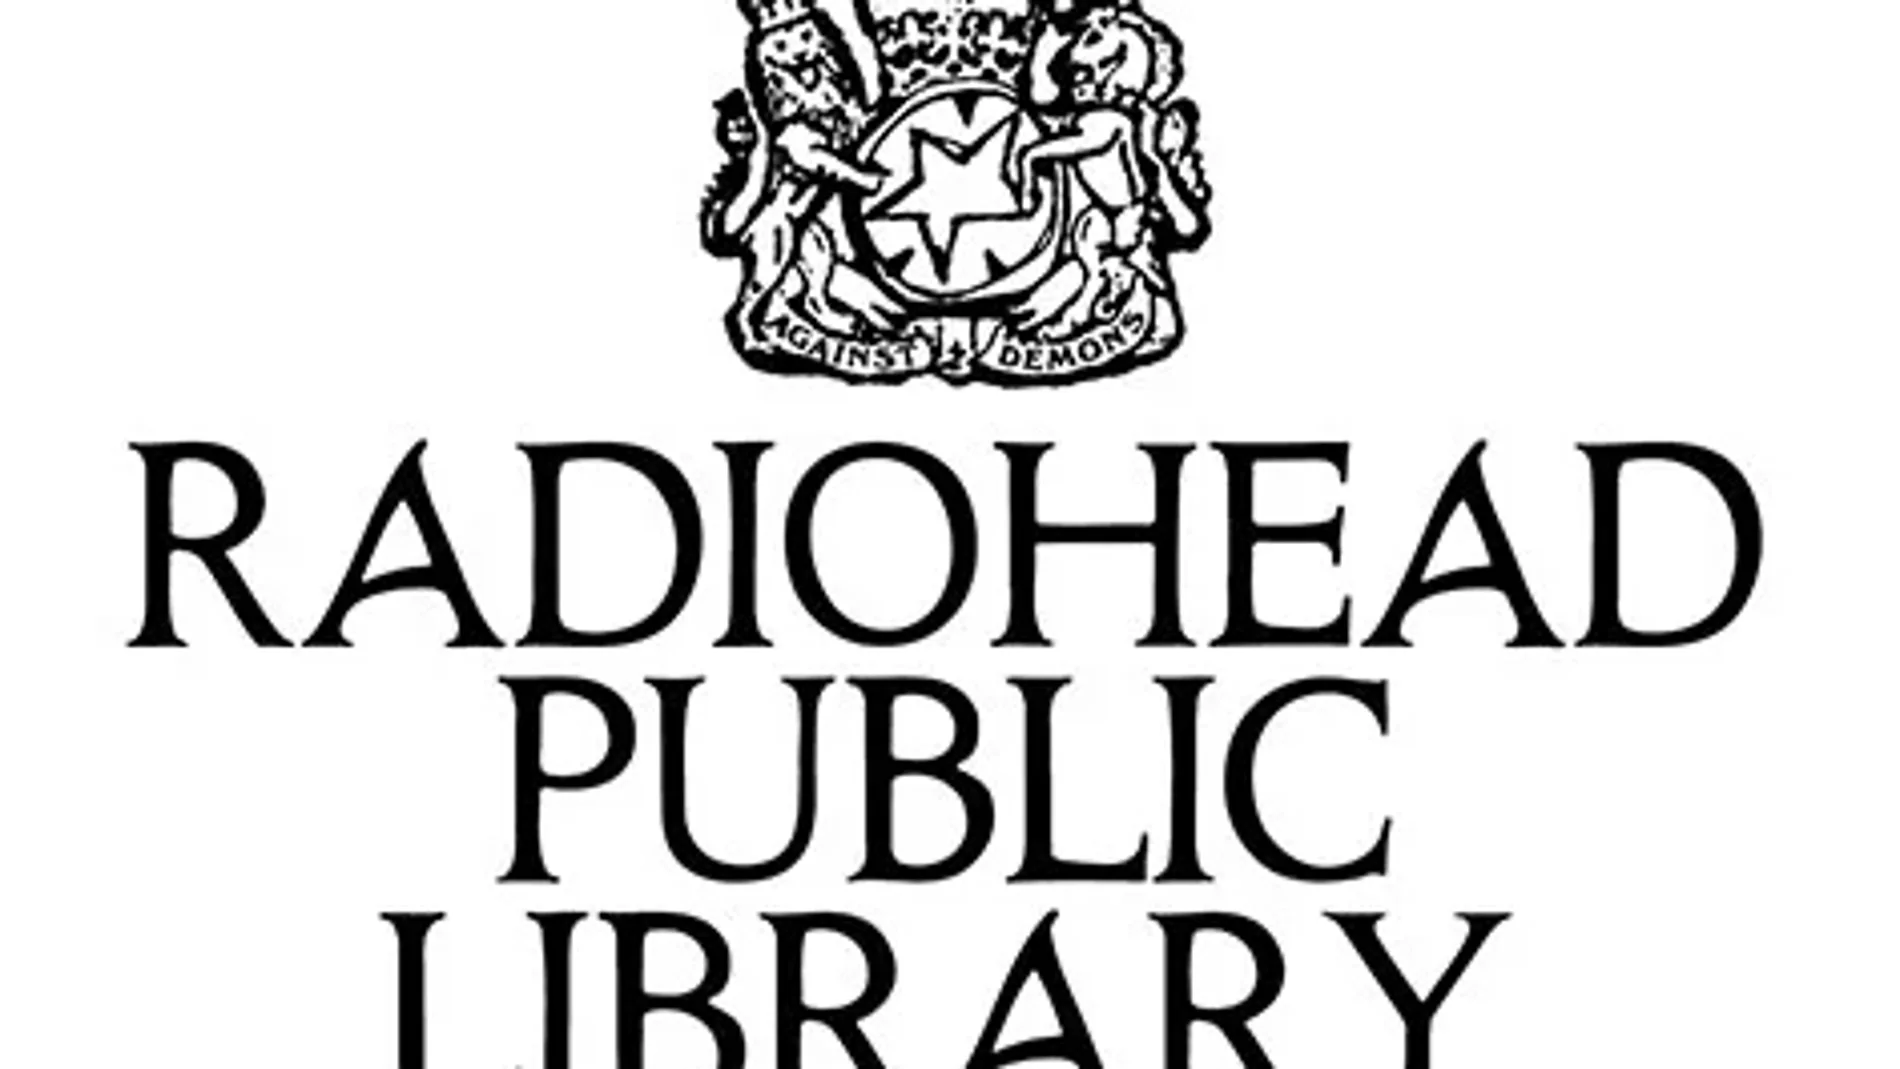 Radiohead Public Library